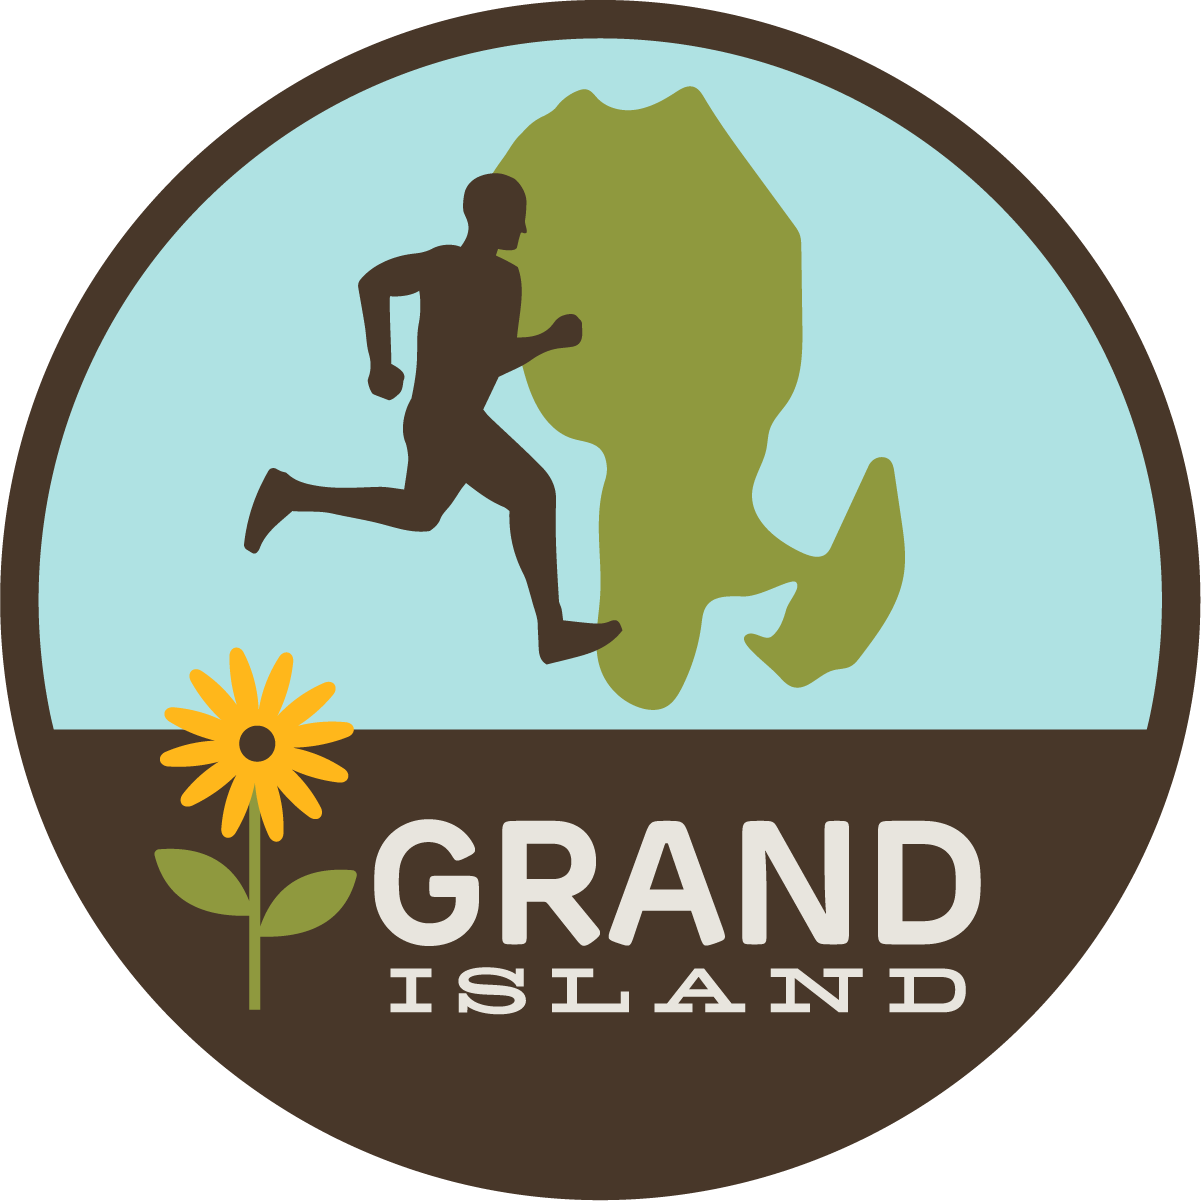 Grand Island Trail Run logo on RaceRaves